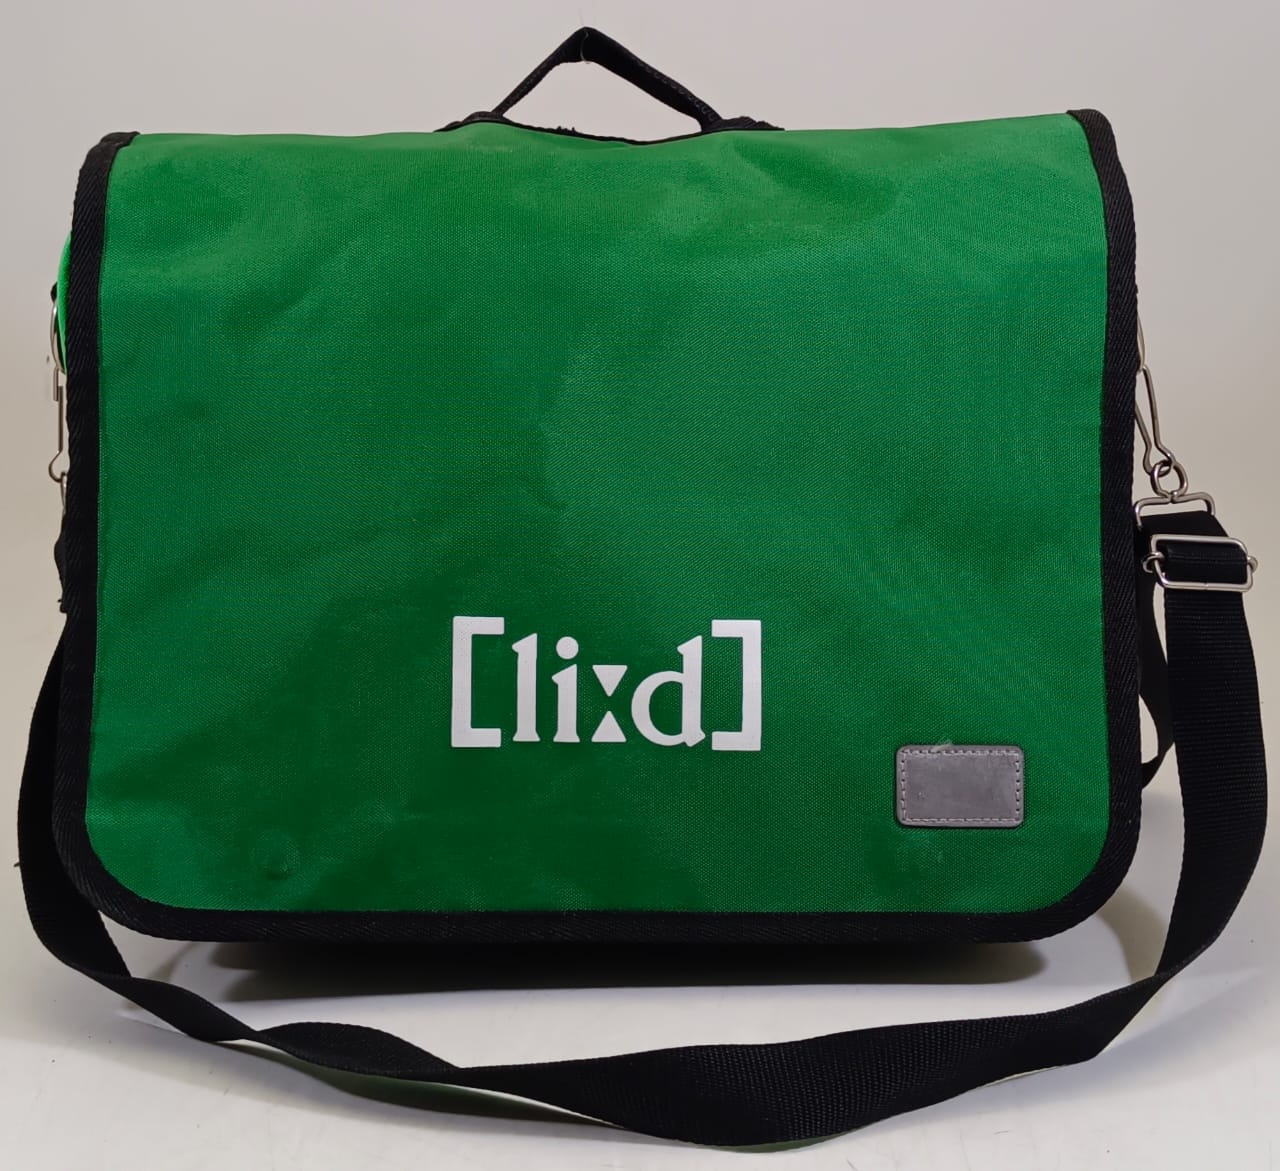 Green Lid School Bag